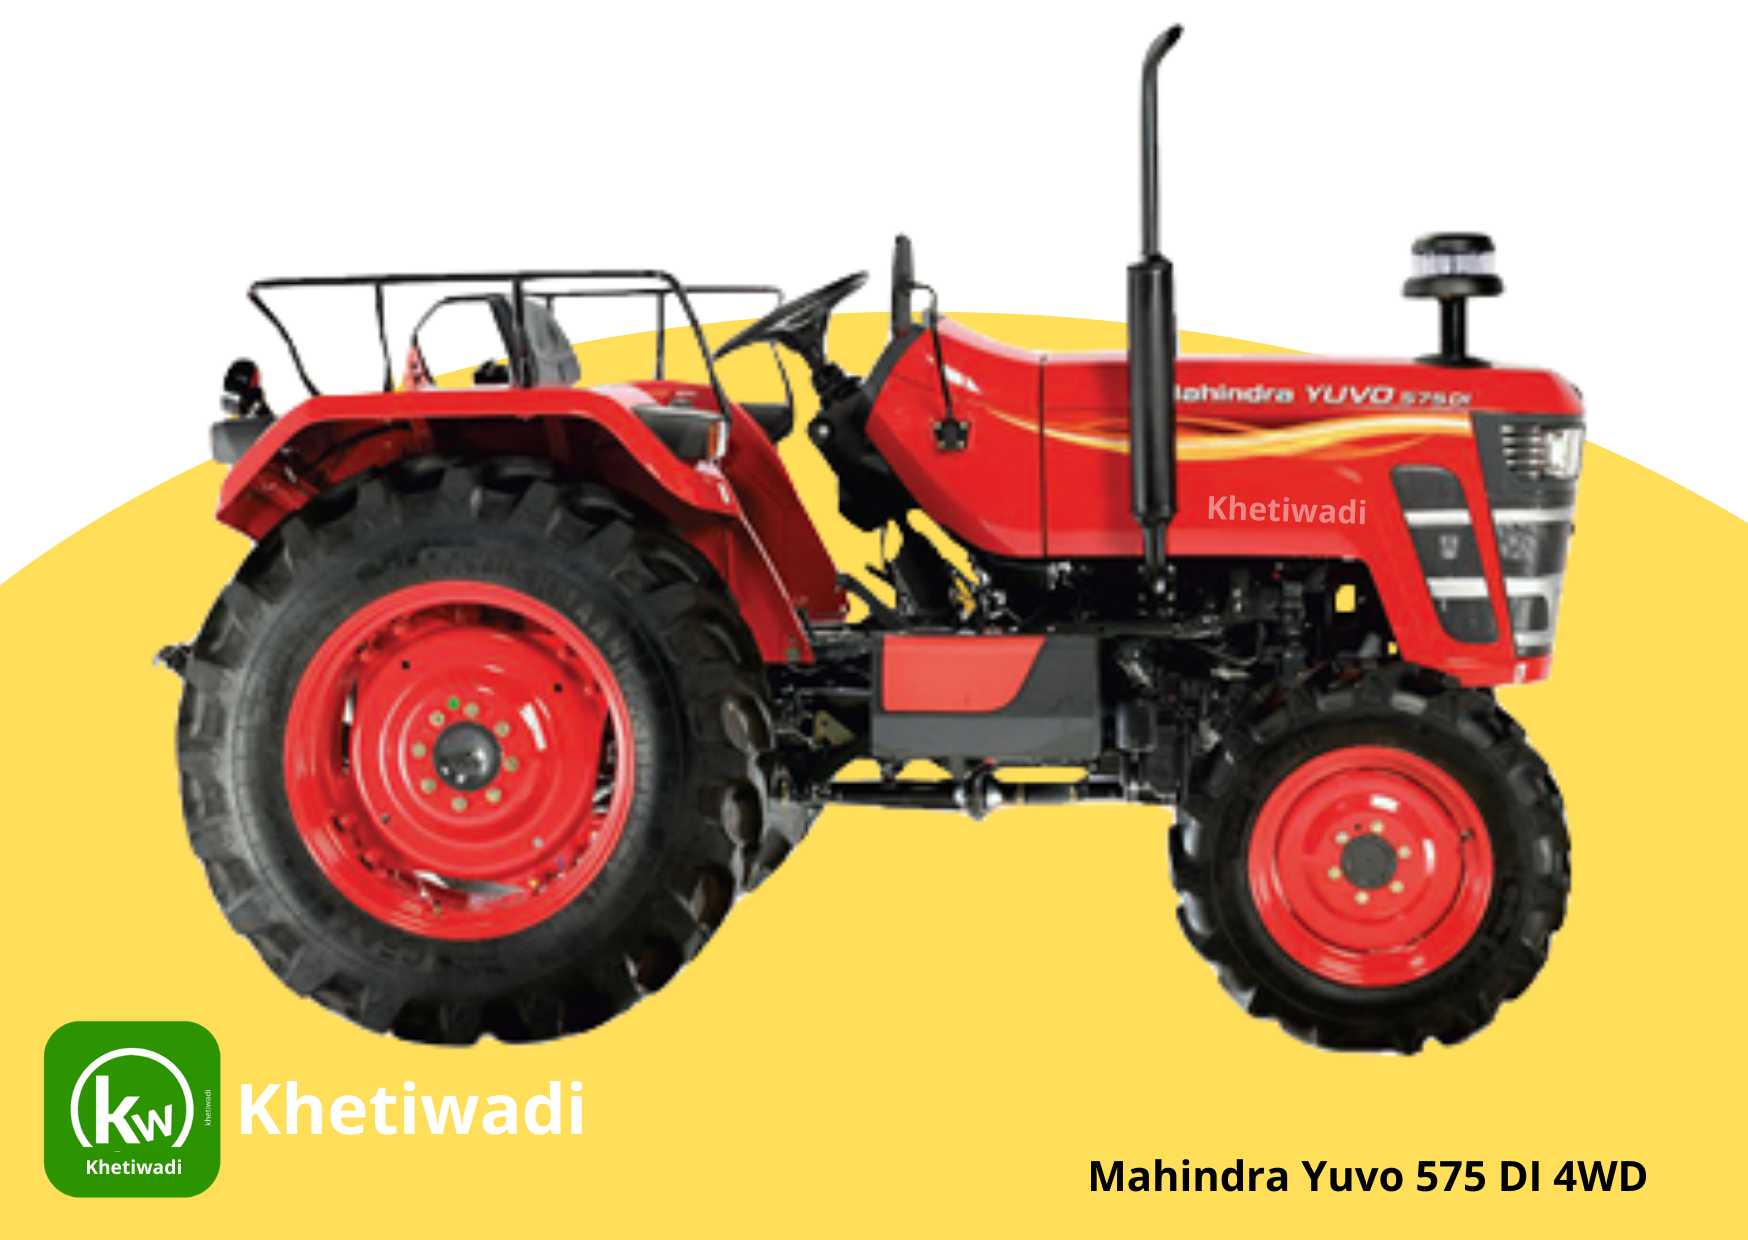 Mahindra Yuvo 575 DI 4WD image